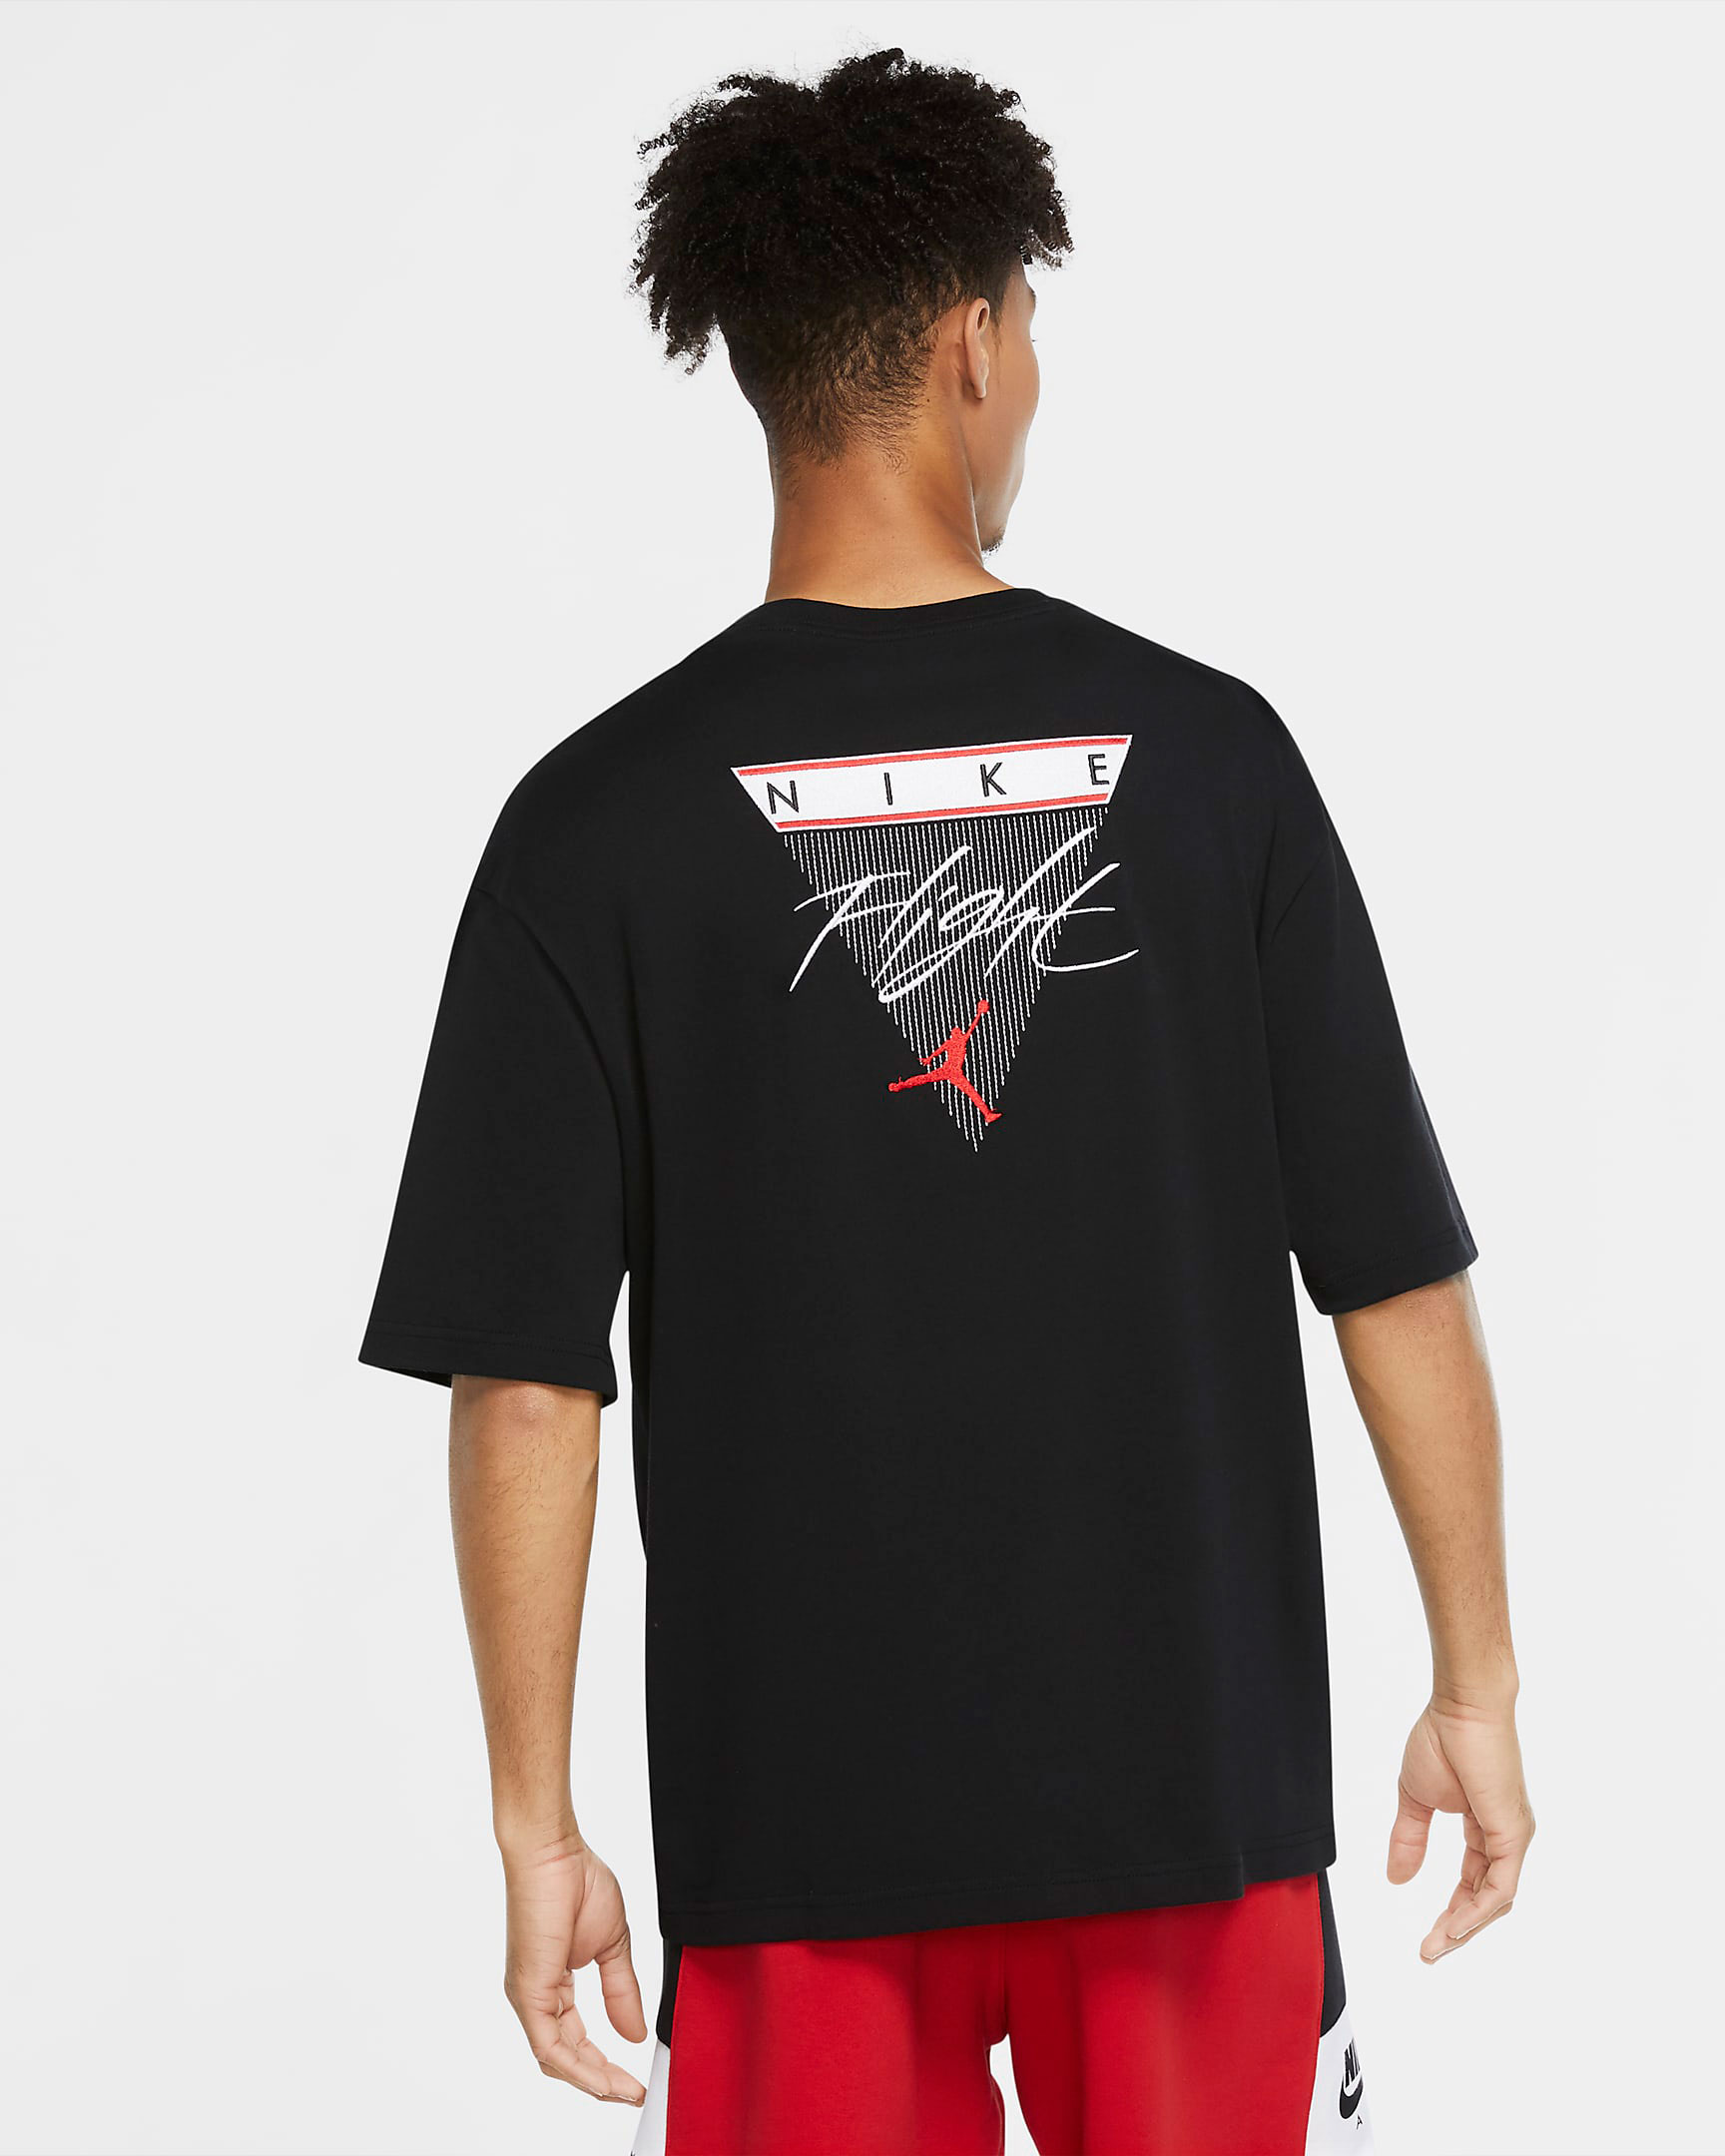 Union Air Jordan 4 Shirts to Match | SneakerFits.com